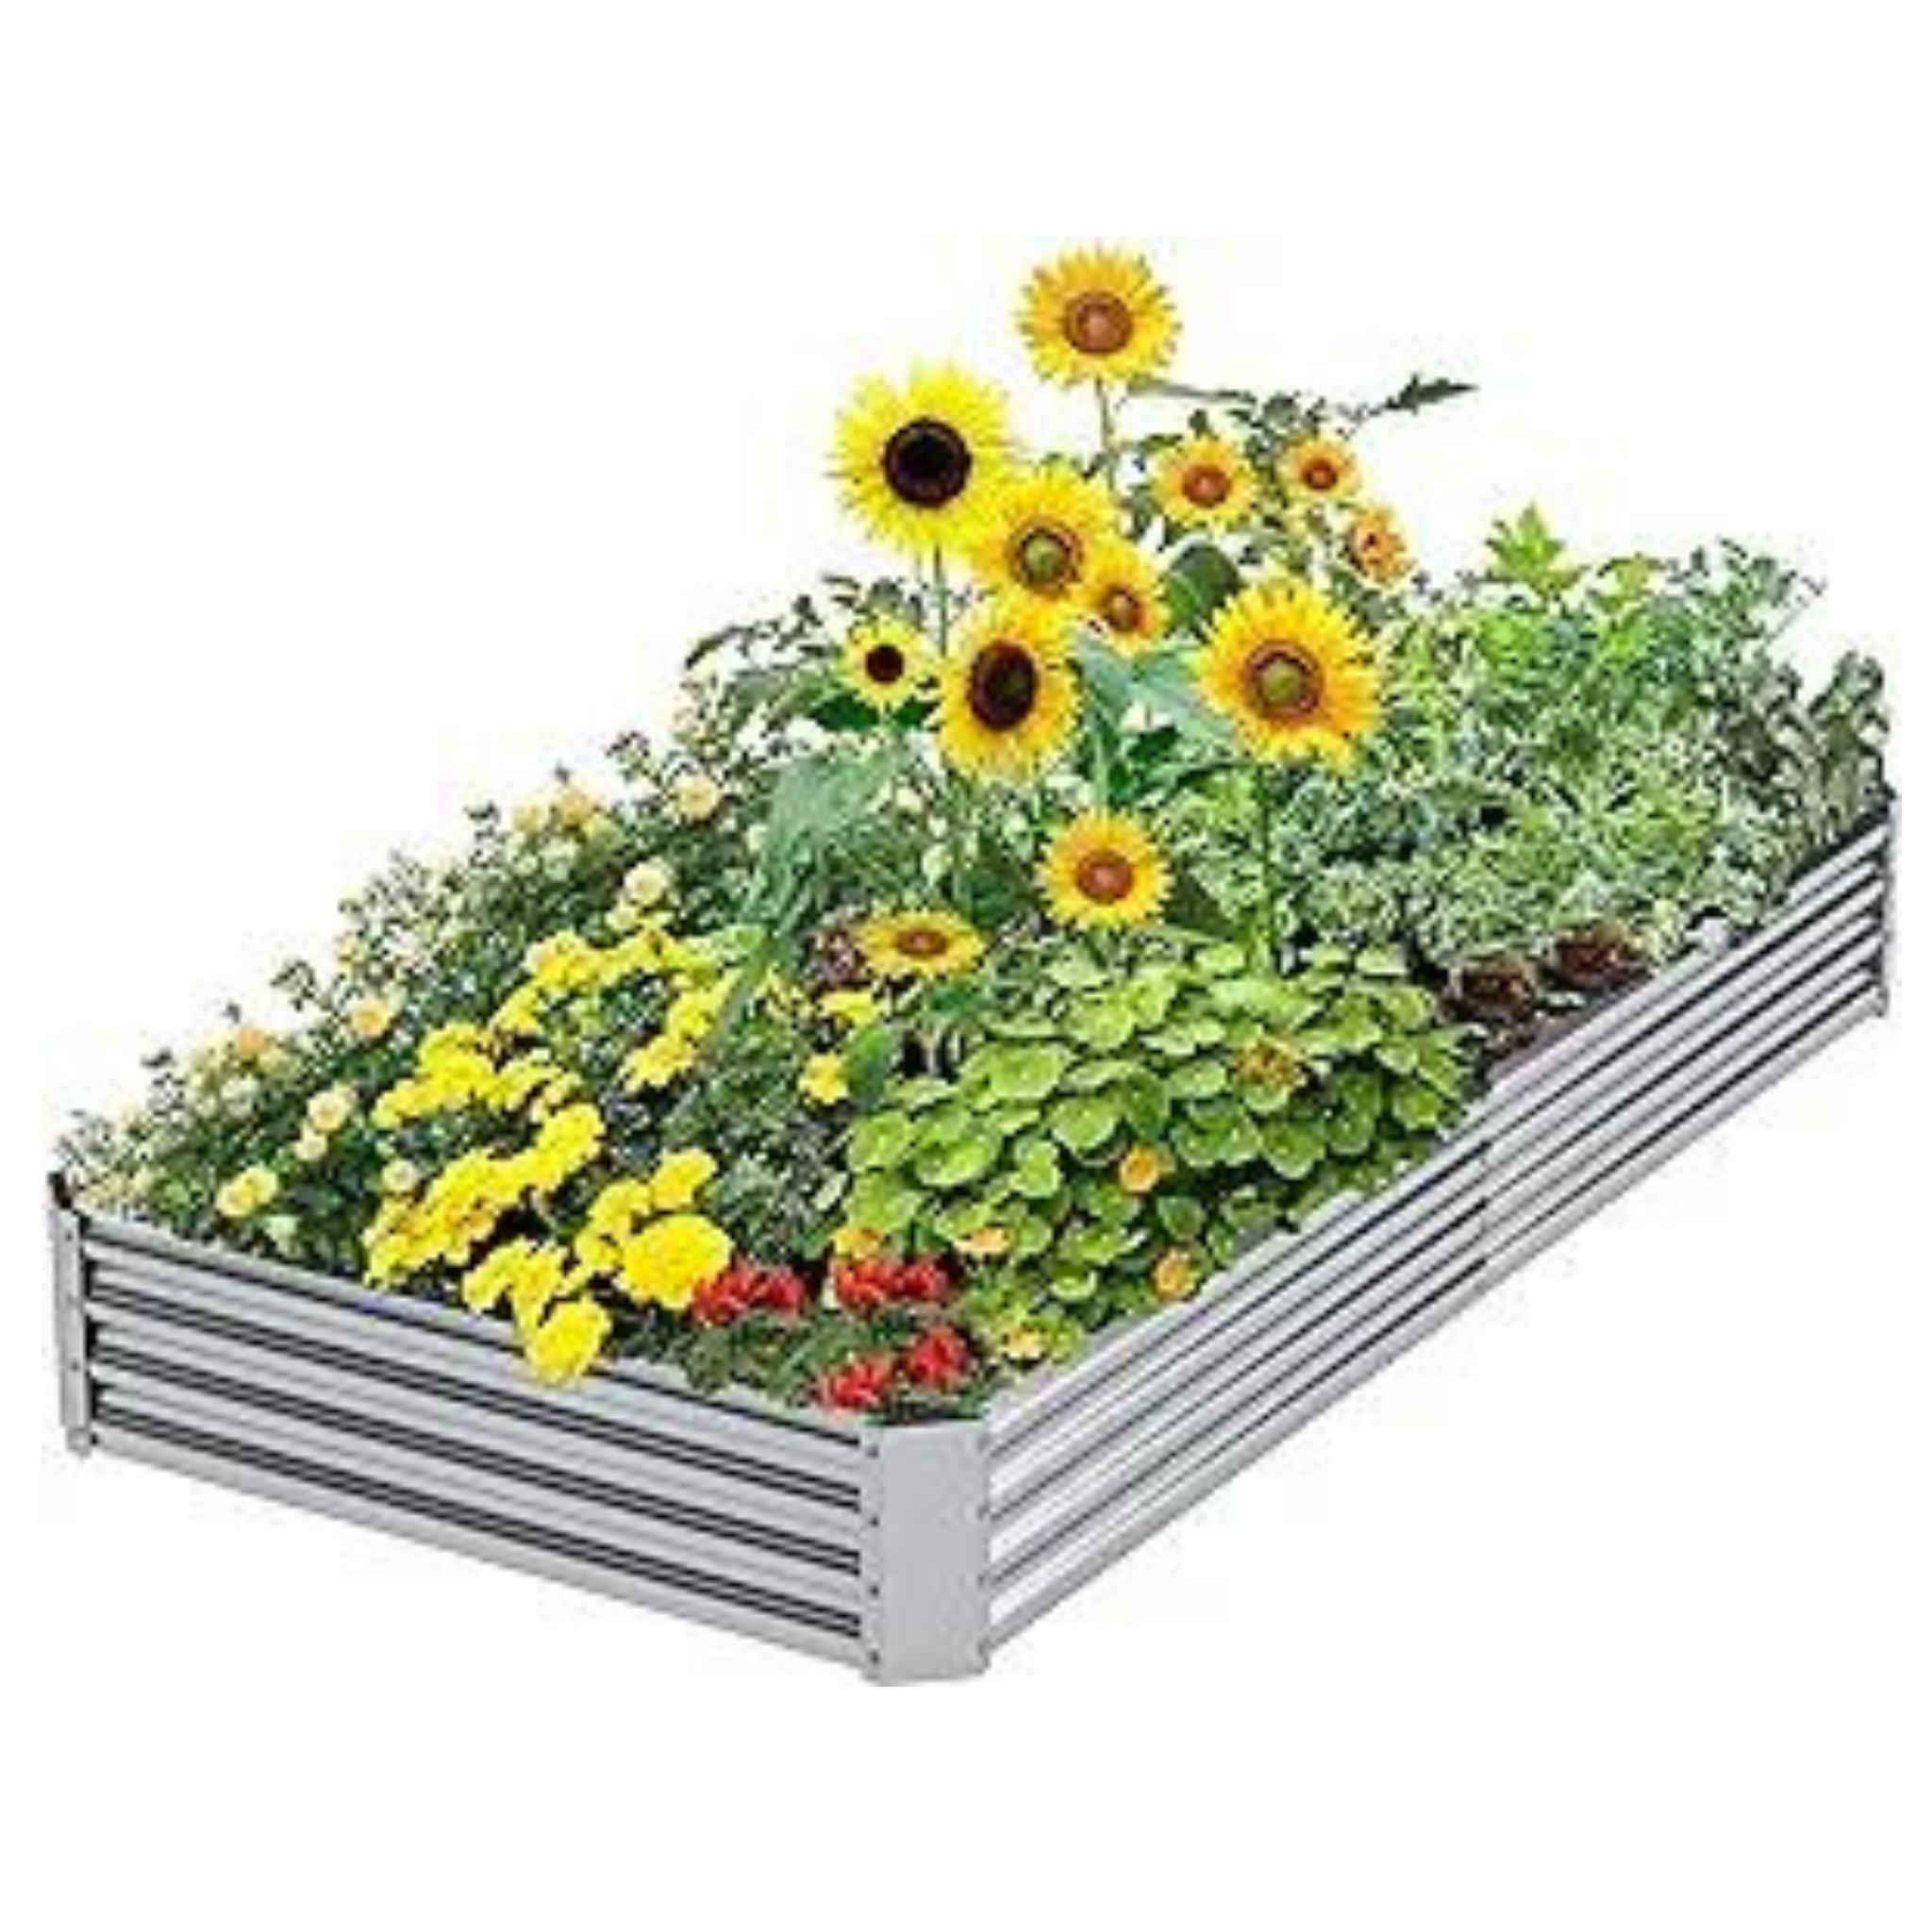 JTPTU Large Metal Galvanized Raised Garden Bed (8 x 4 x 1 feet)